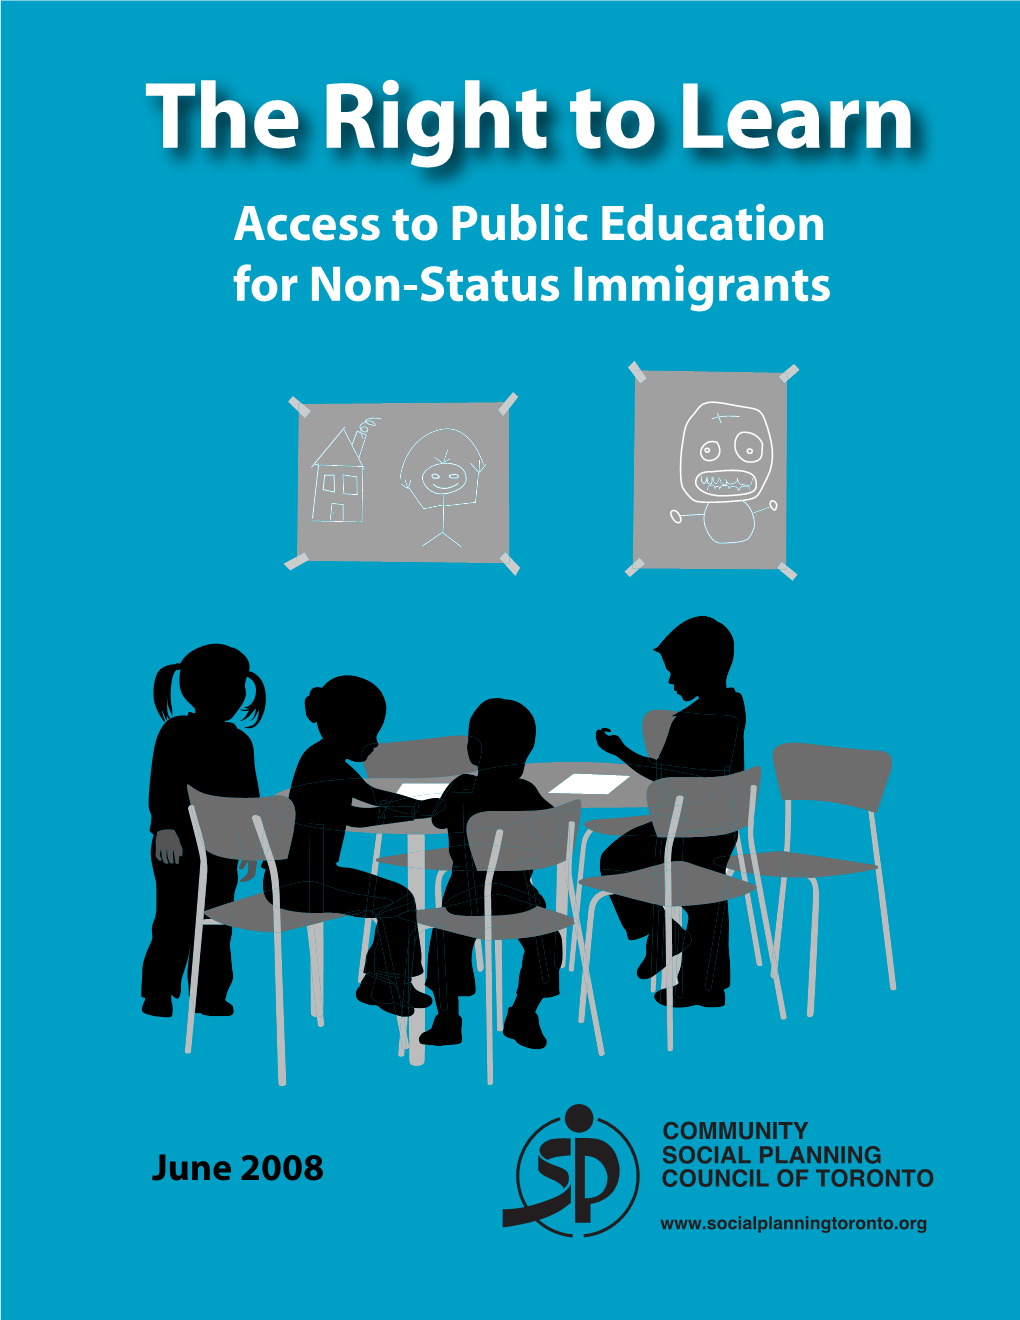 Access to Public Education for Non-Status Immigrants